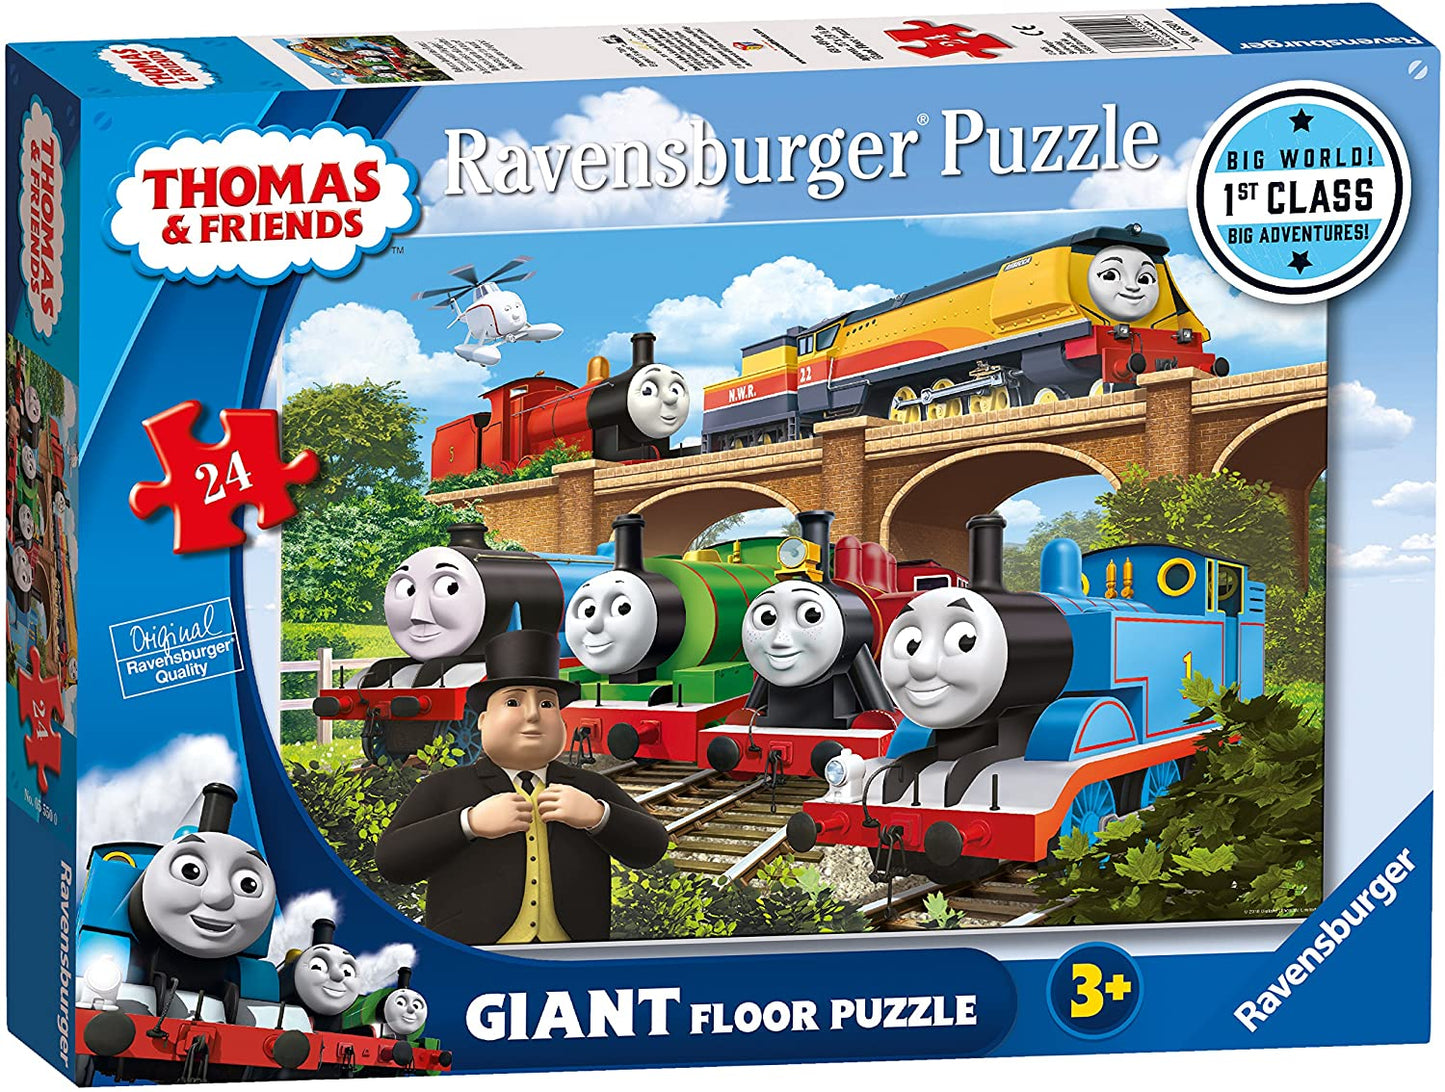 Ravensburger - Thomas & Friends Giant Floor Puzzle - 24 Piece Jigsaw Puzzle